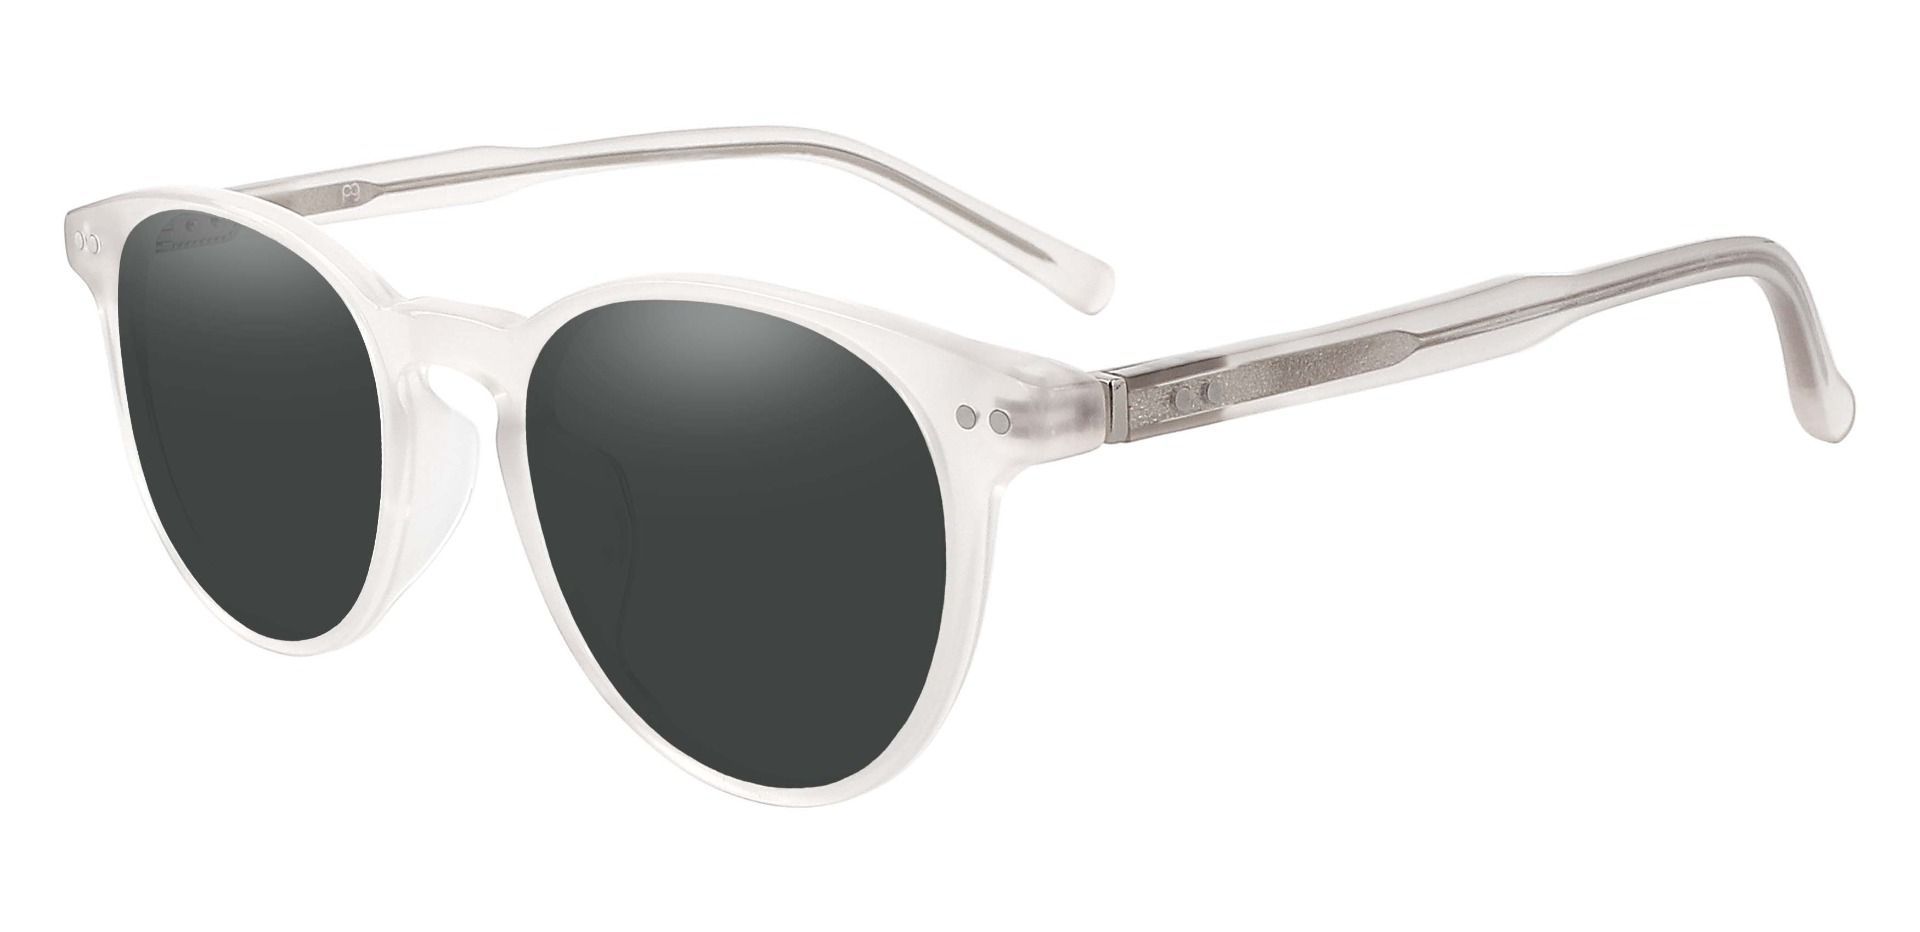 Marianna Oval Progressive Sunglasses - White Frame With Gray Lenses